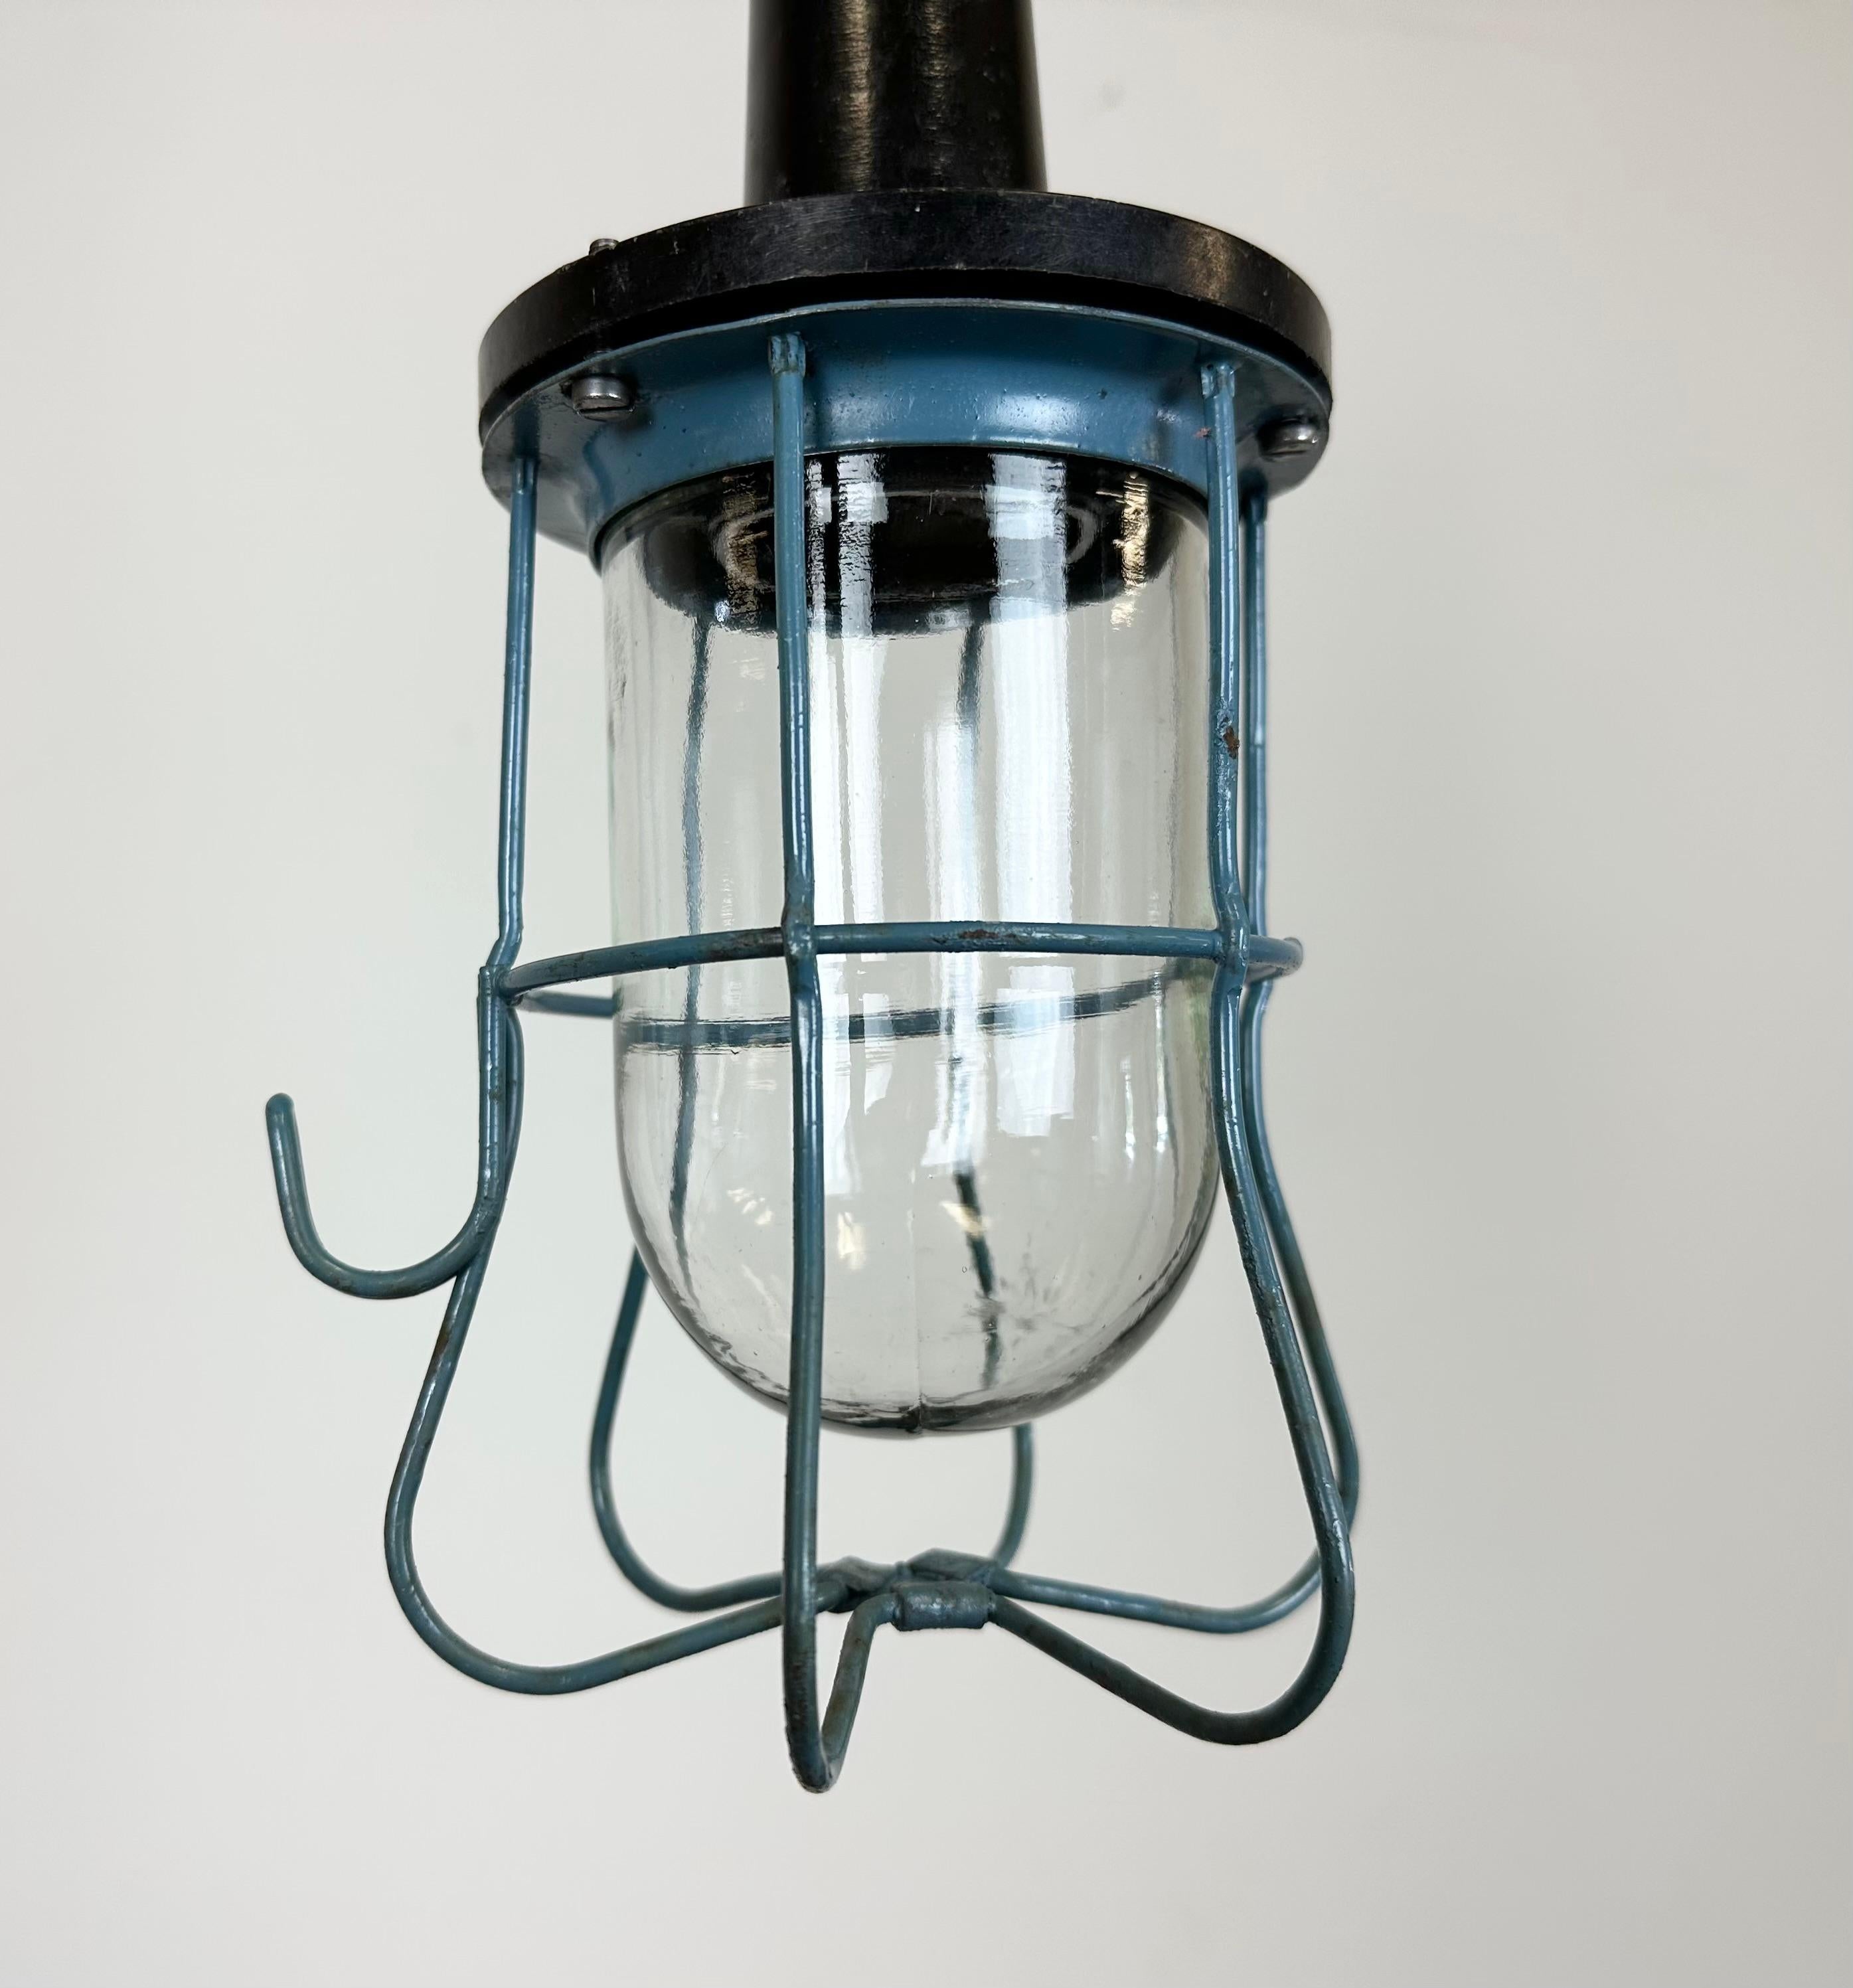 Vintage Industrial Bakelite Hanging Work Light, 1960s In Good Condition For Sale In Kojetice, CZ